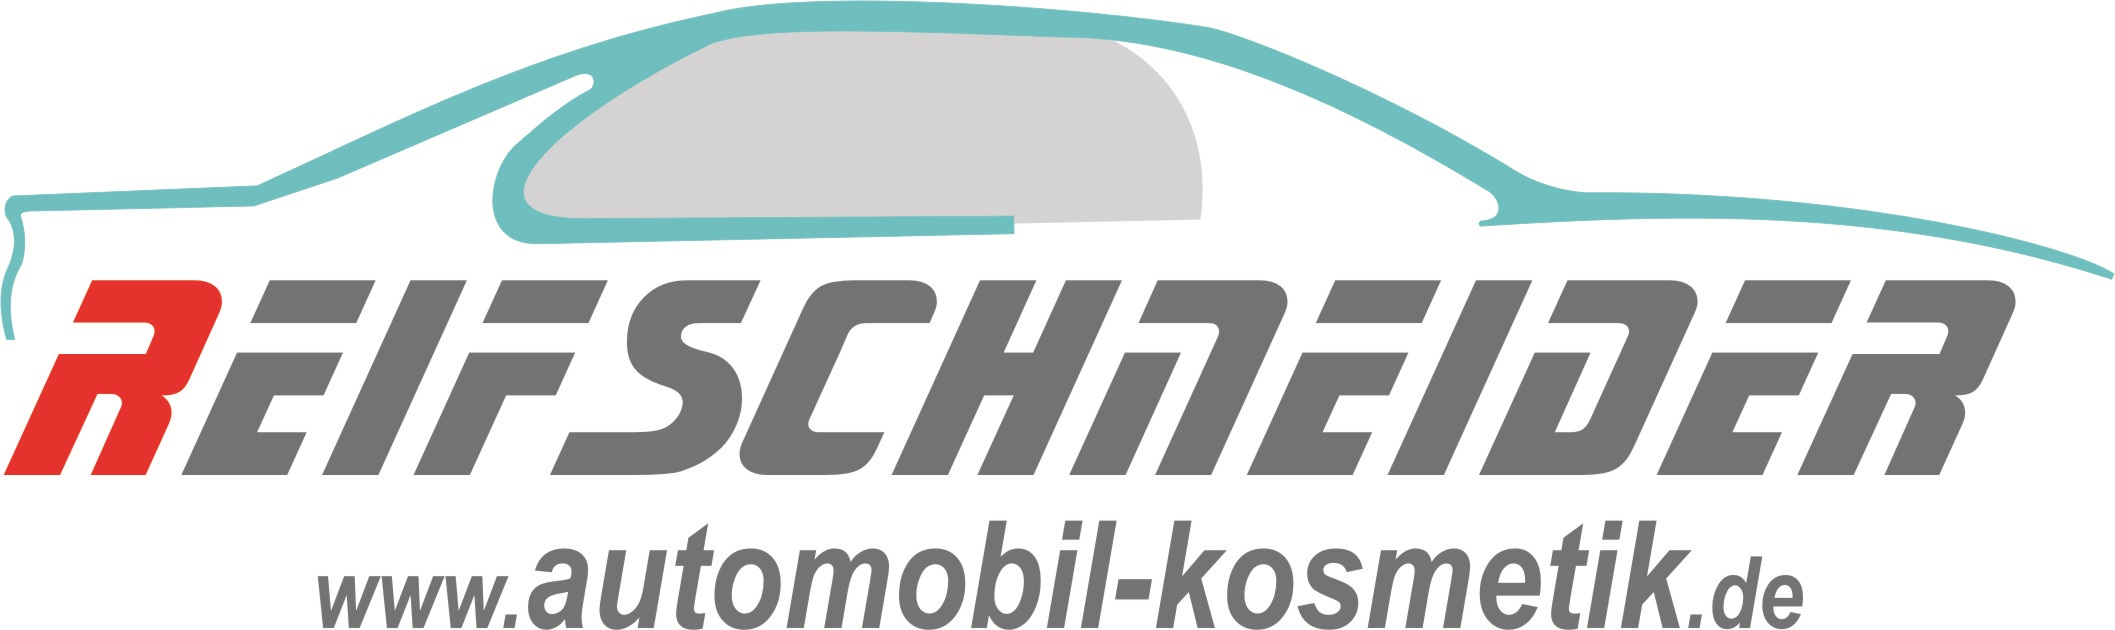 Automobilkosmetik logo